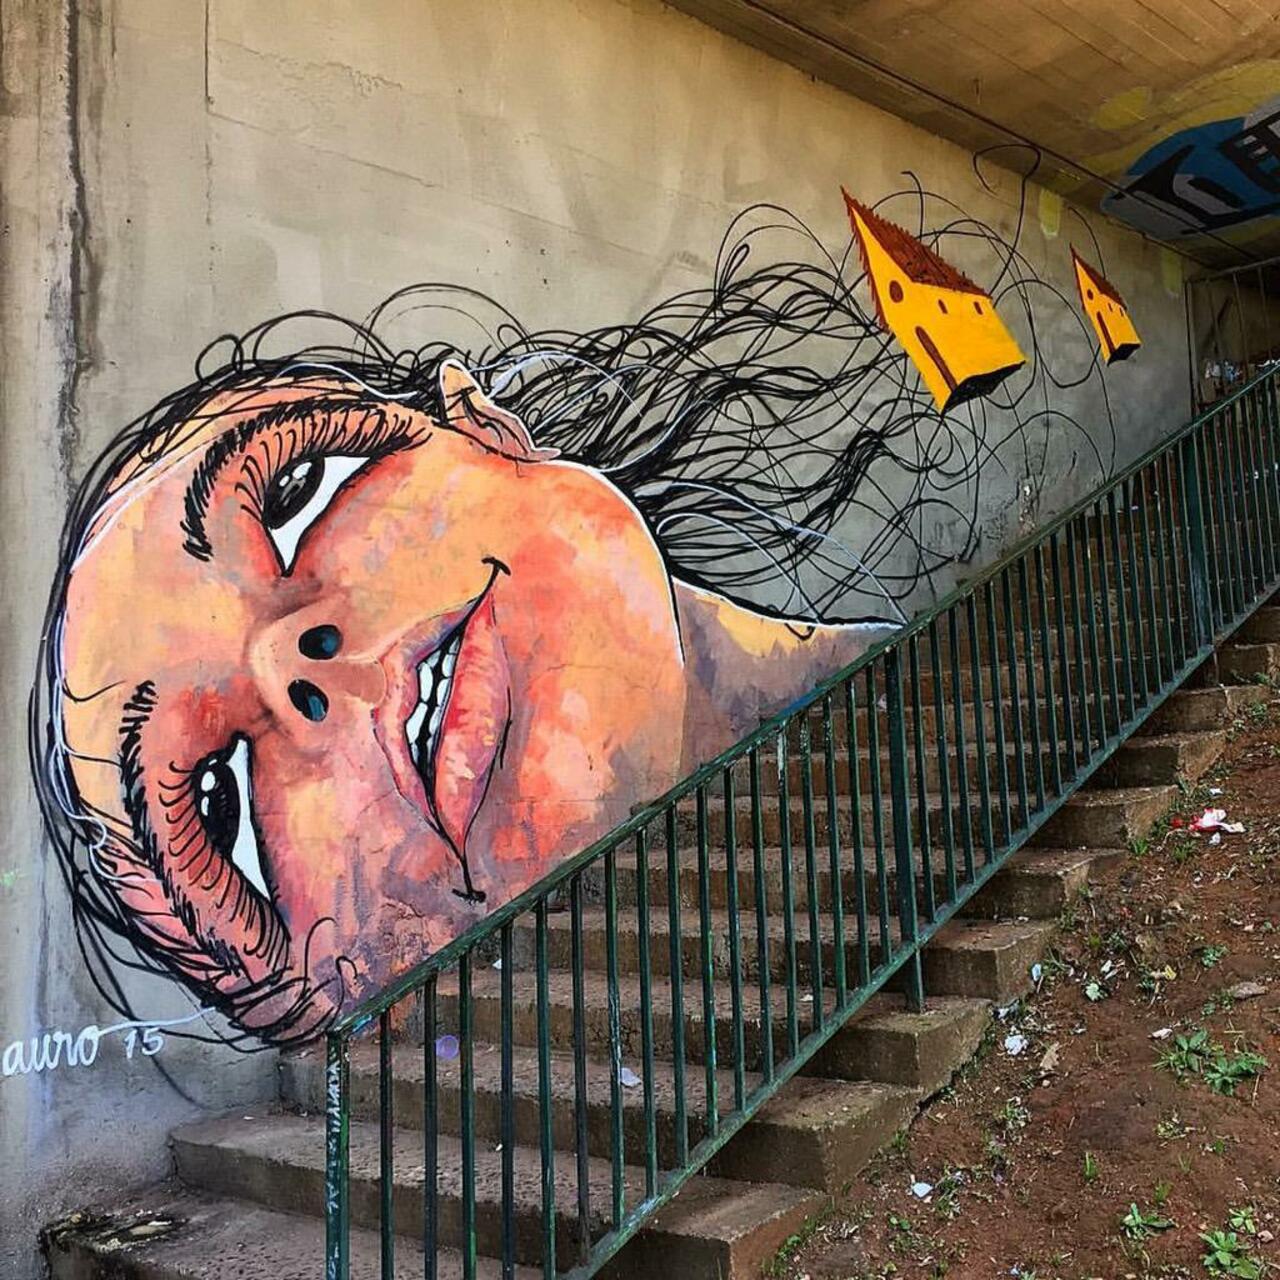 RT ArchaicManor "Street Art by Reveracidade in São Paulo 

#art #graffiti #mural #streetart http://t.co/dkEhypmeEG yo"